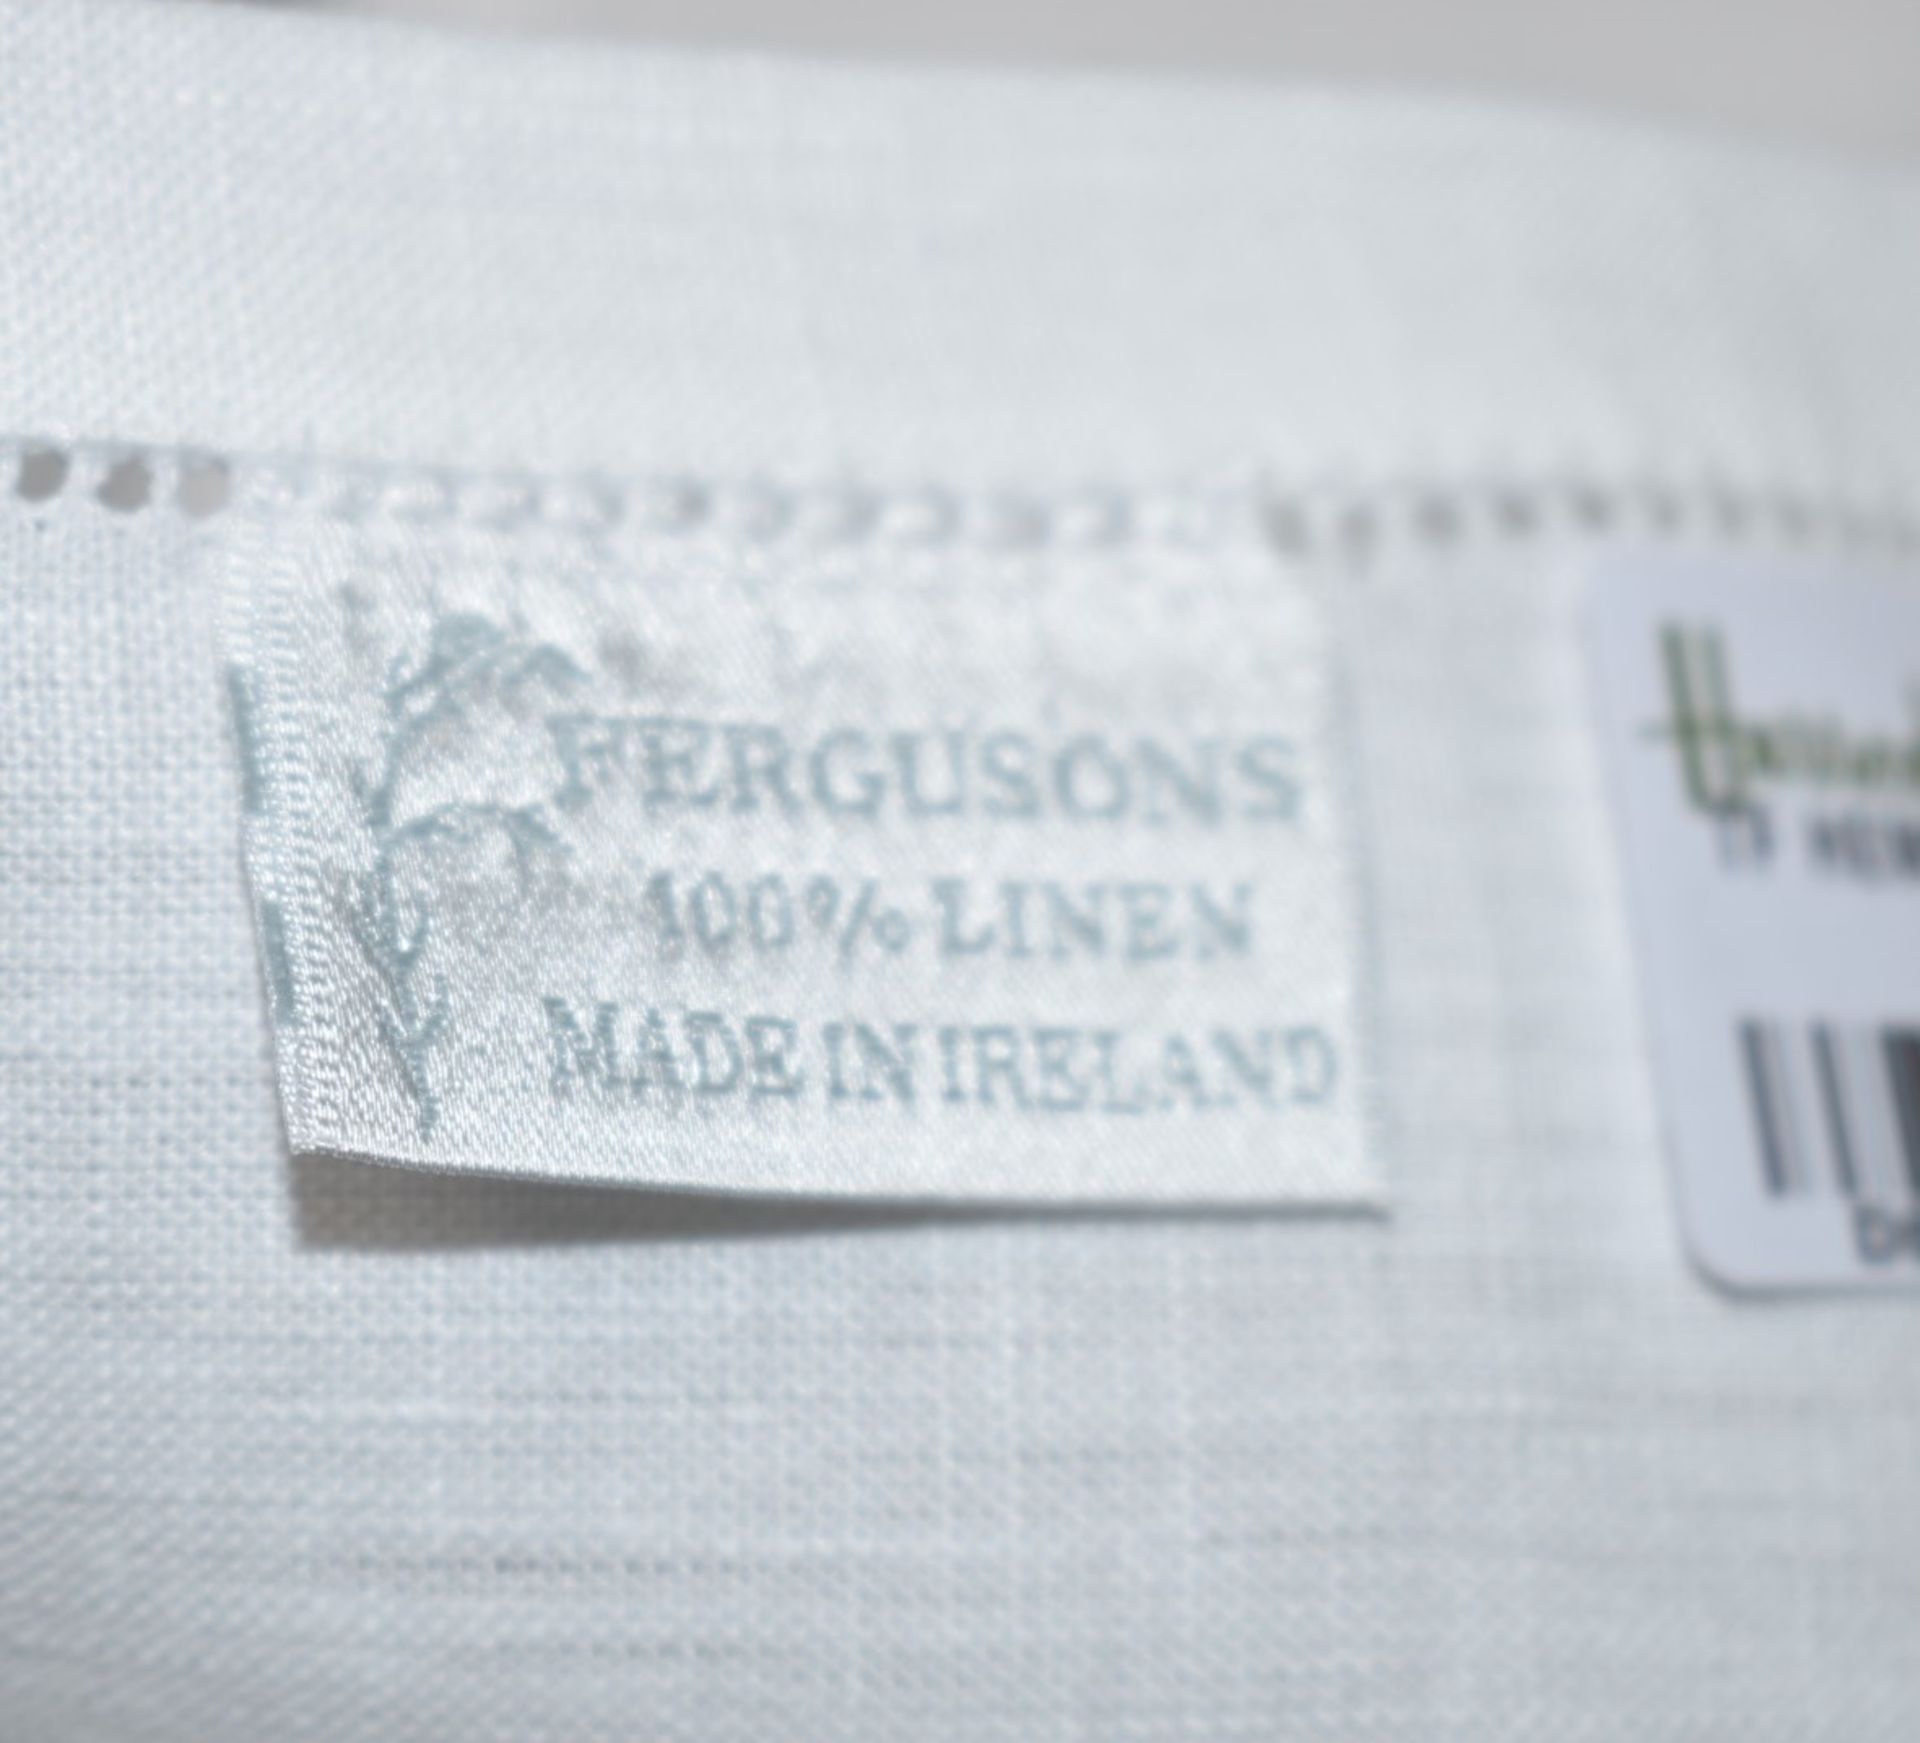 1 x THOMAS FERGUSON Pure Irish Linen Hemstitch Edge Napkin (56cm x 56cm) - Ref: 505817/HAS2224/WH2- - Image 3 of 6